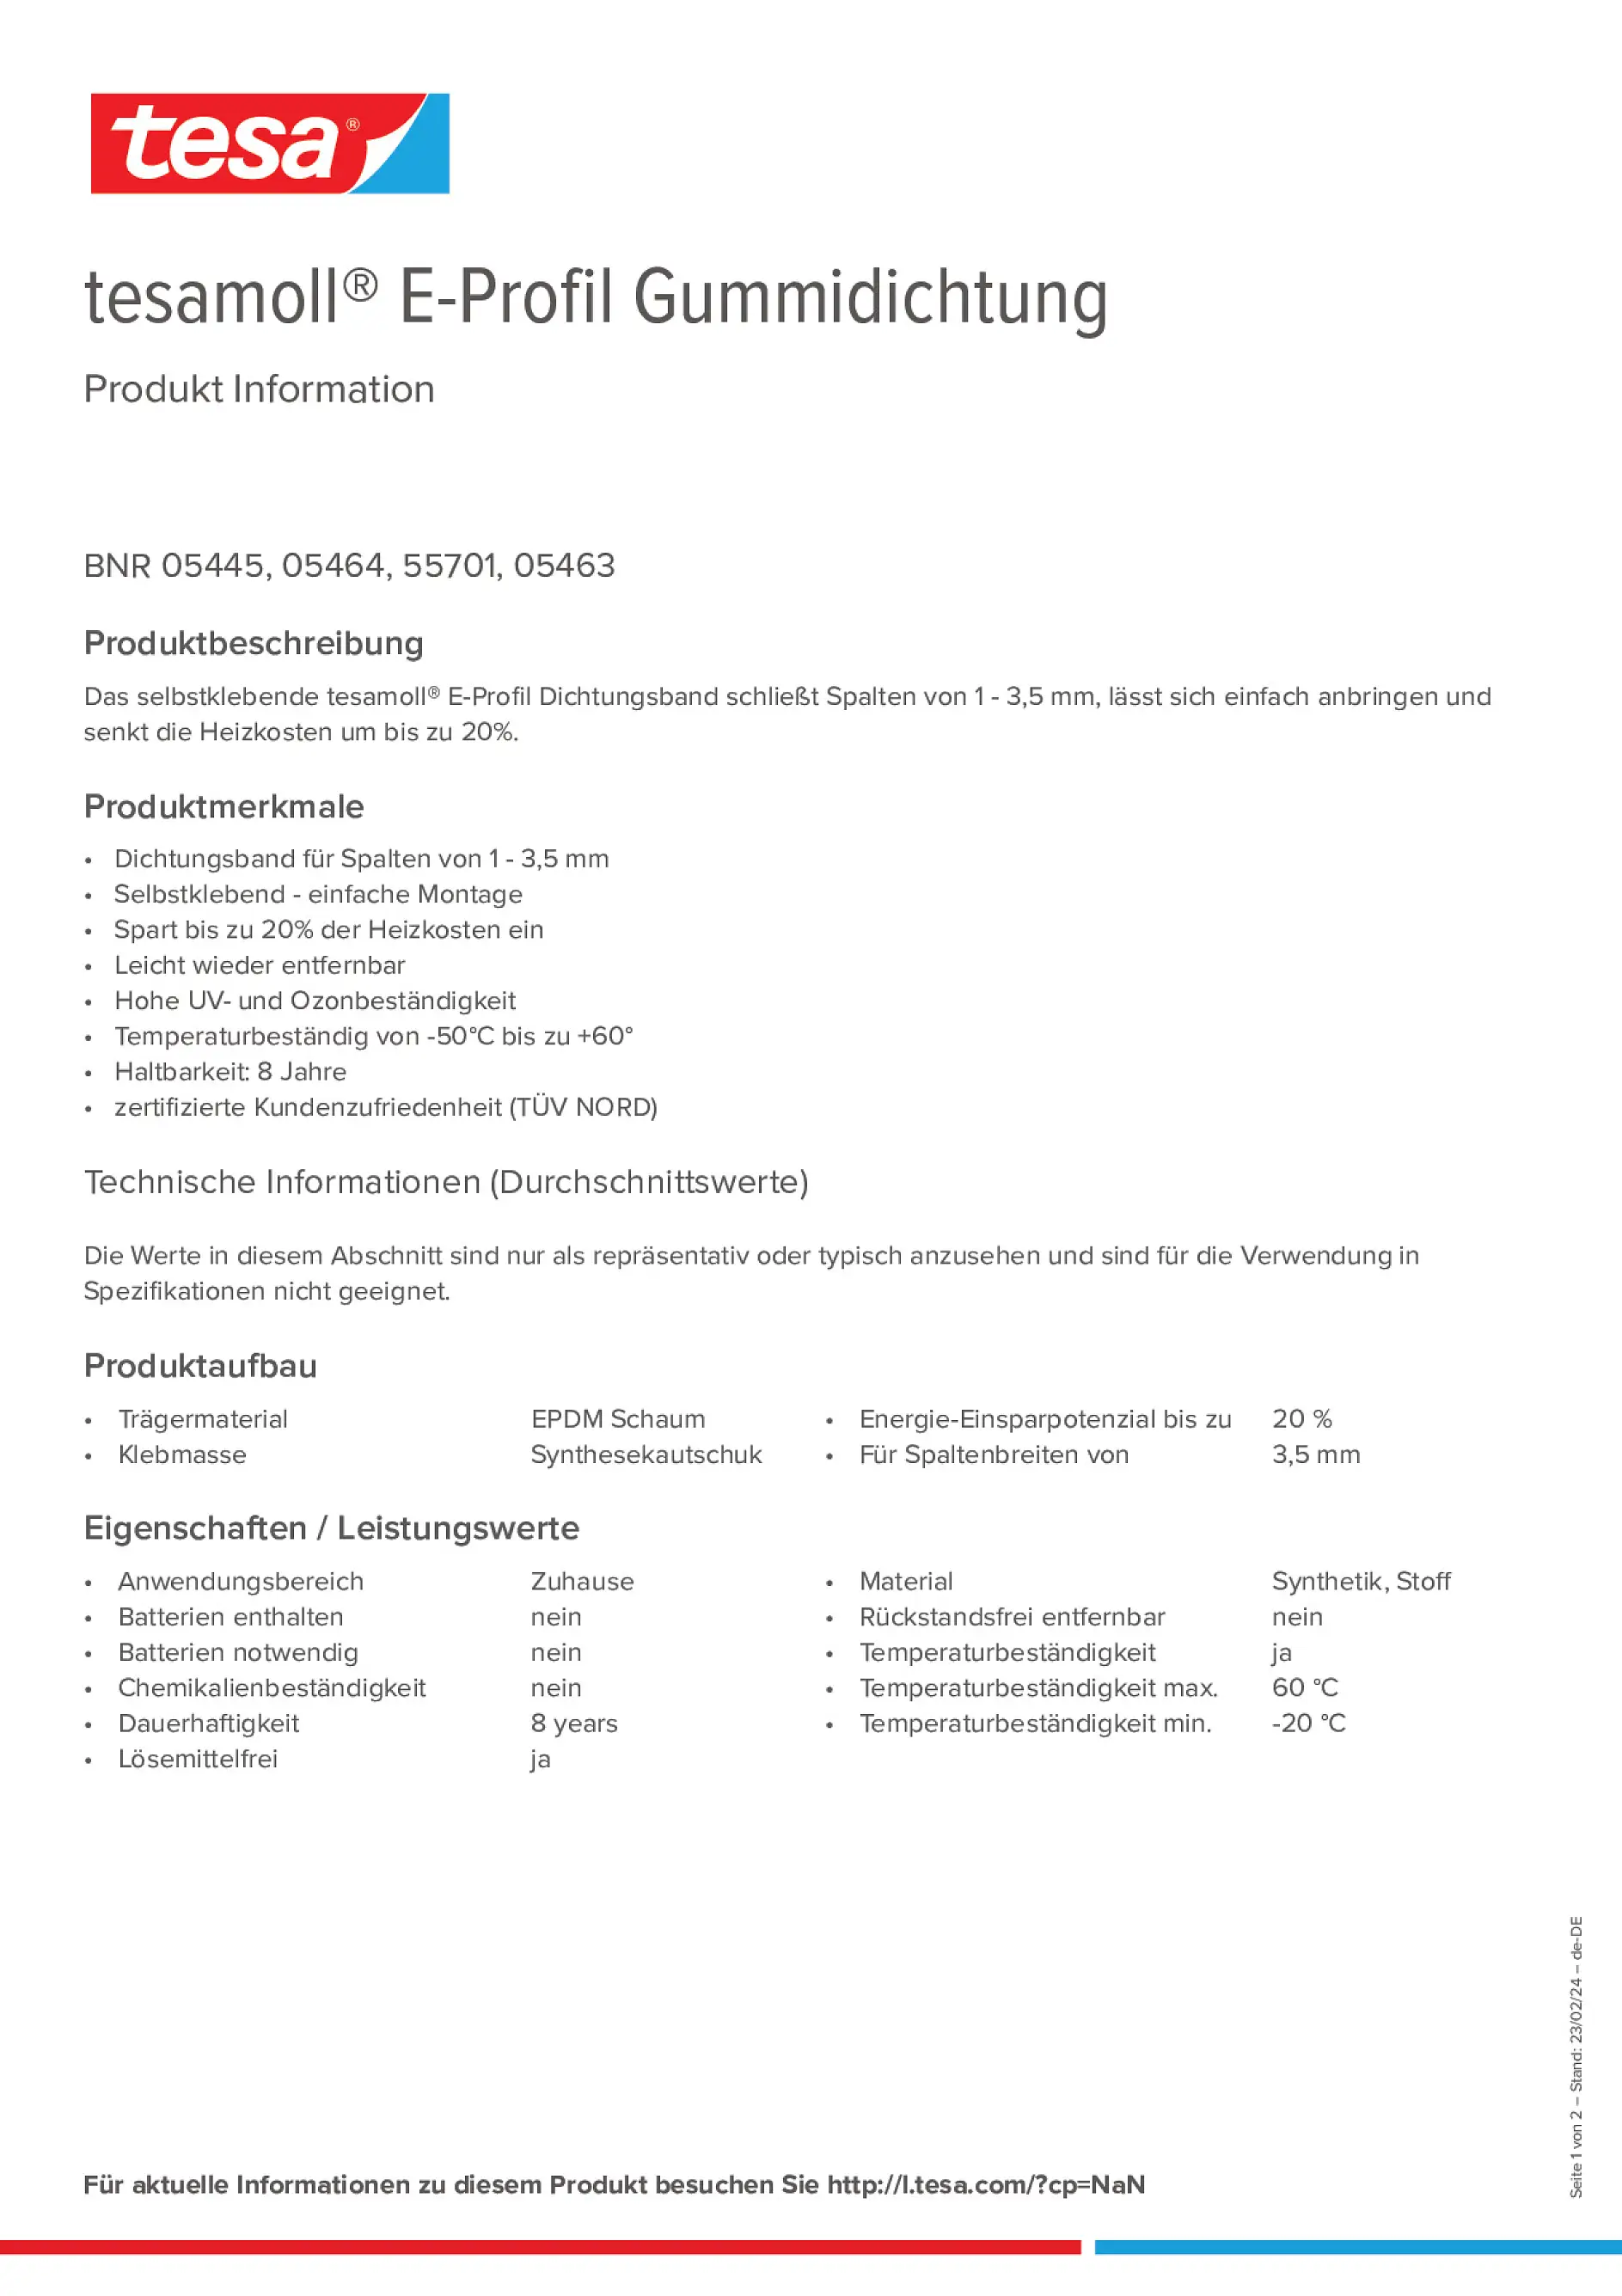 Product information_tesamoll® 5499_de-DE